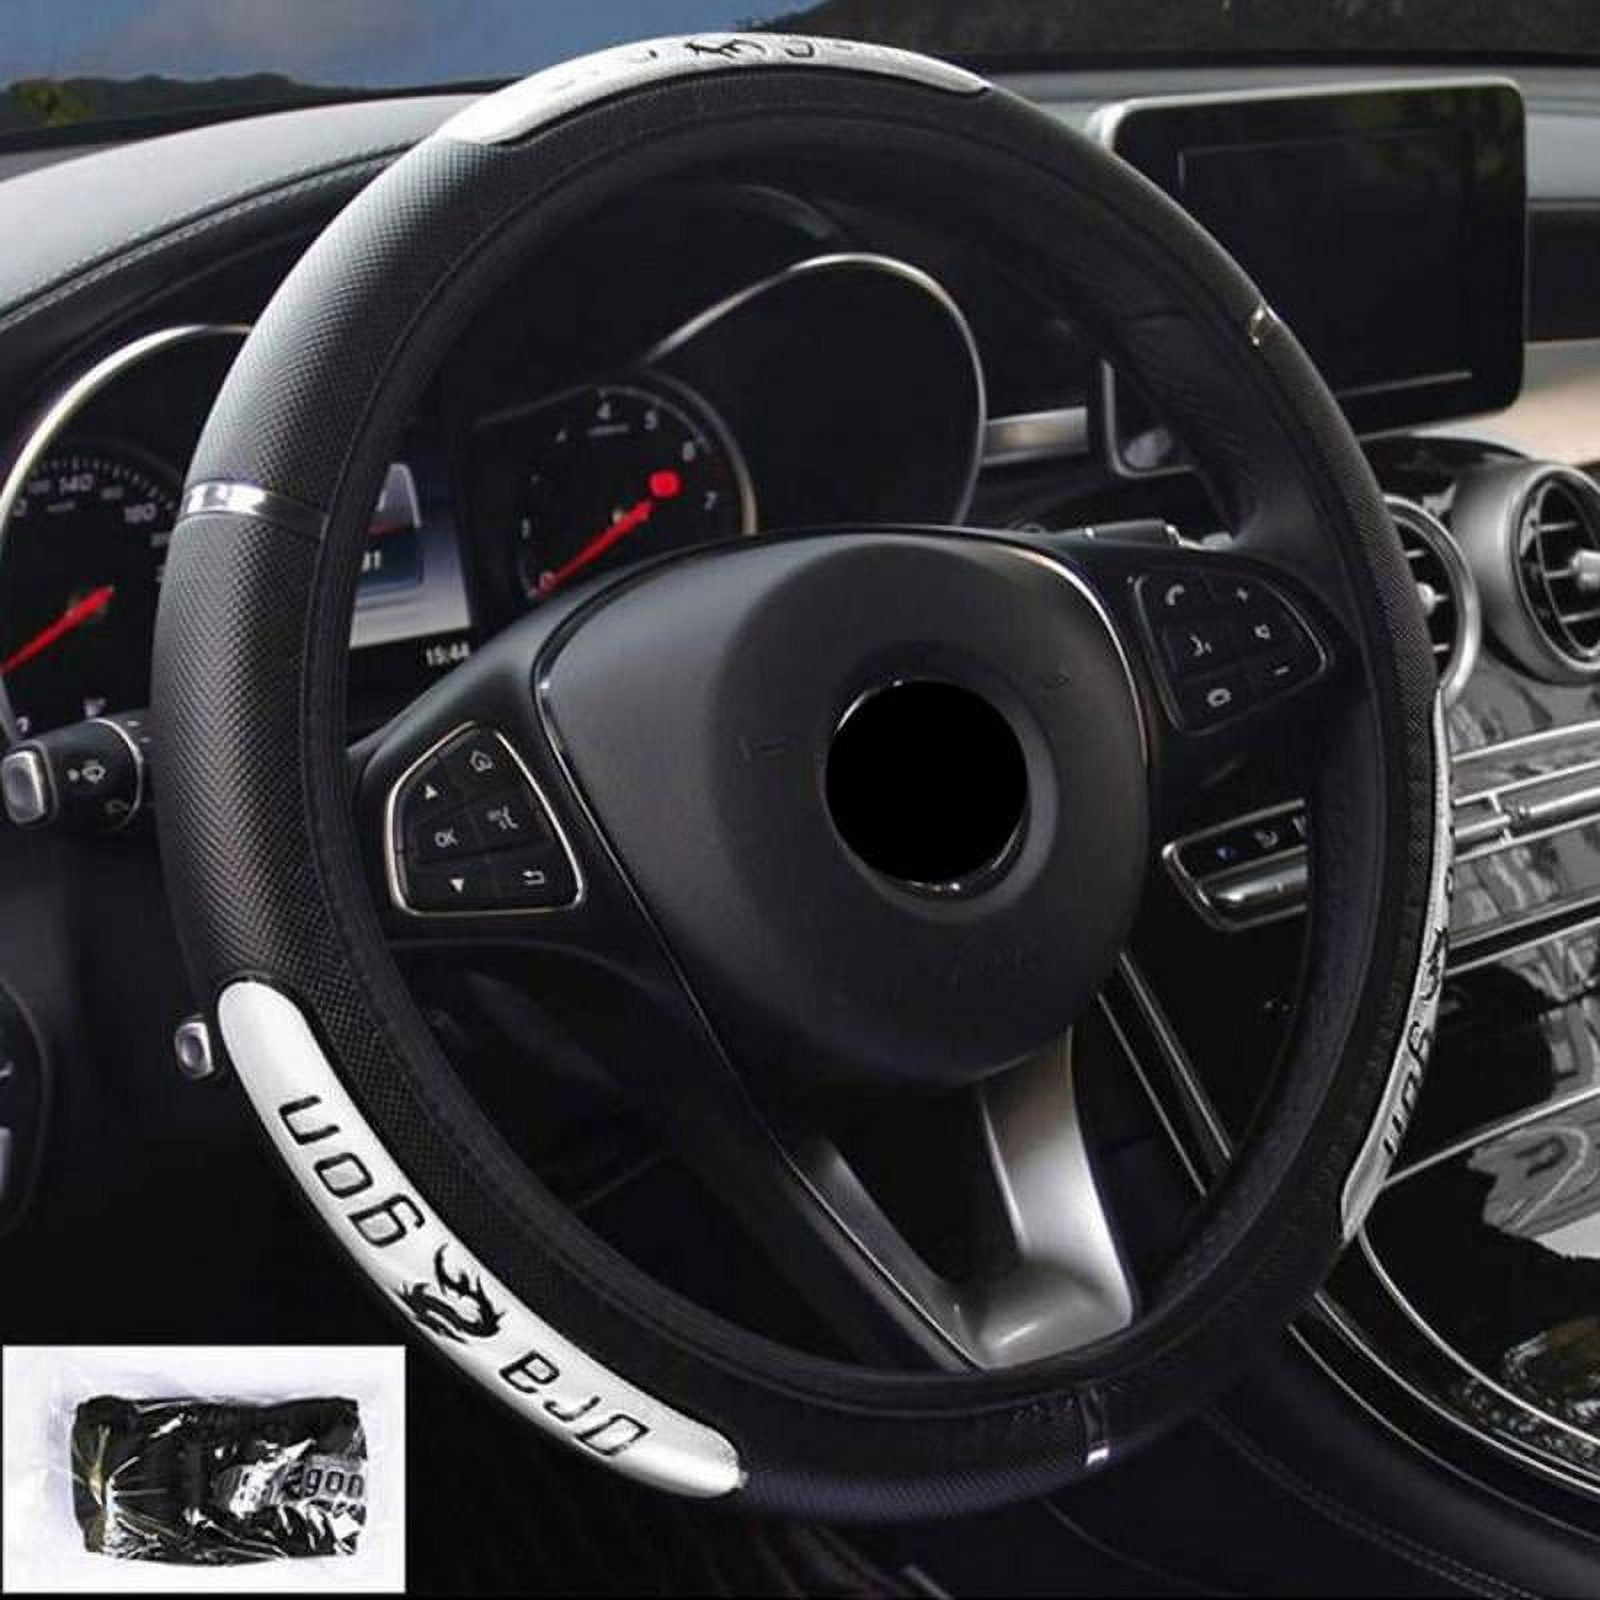 Universal Leather Car Steering Wheel Cover 38cm Car-Styling Sport Auto Steering Wheel Covers Anti-Slip Automotive Accessories Orange